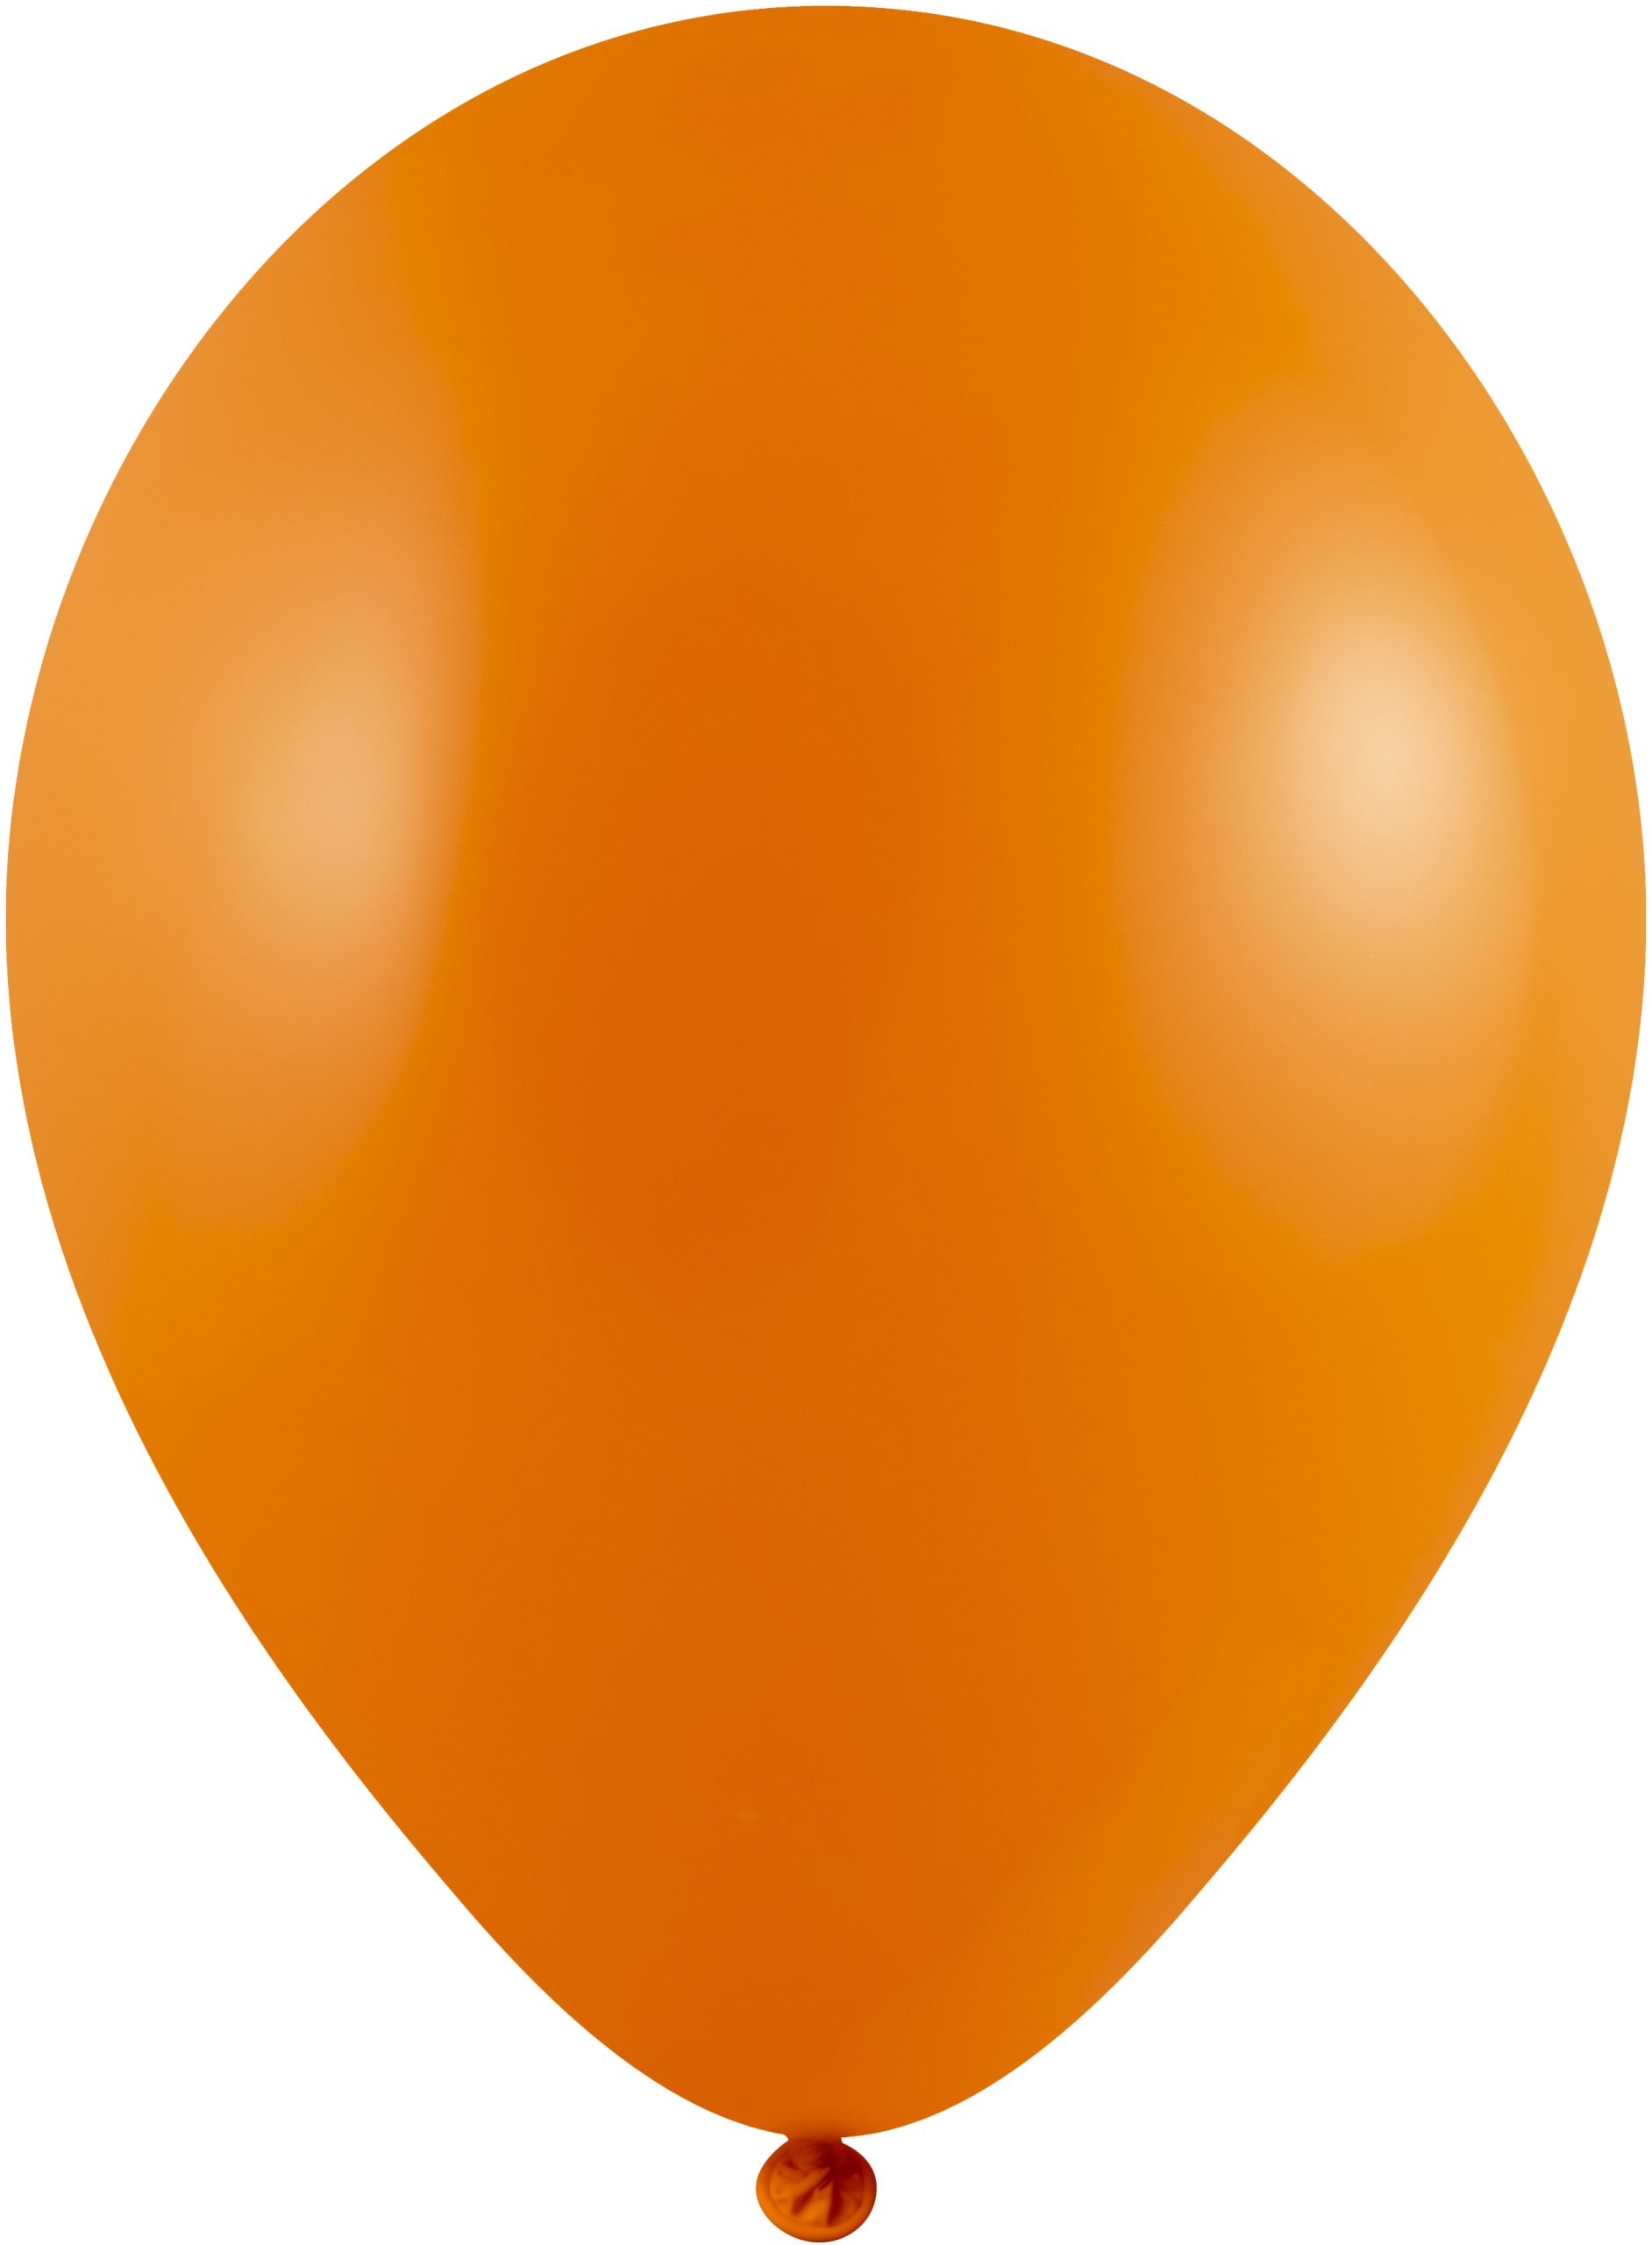 Ballonnen  - Ø 33 cm | Kleine aantallen